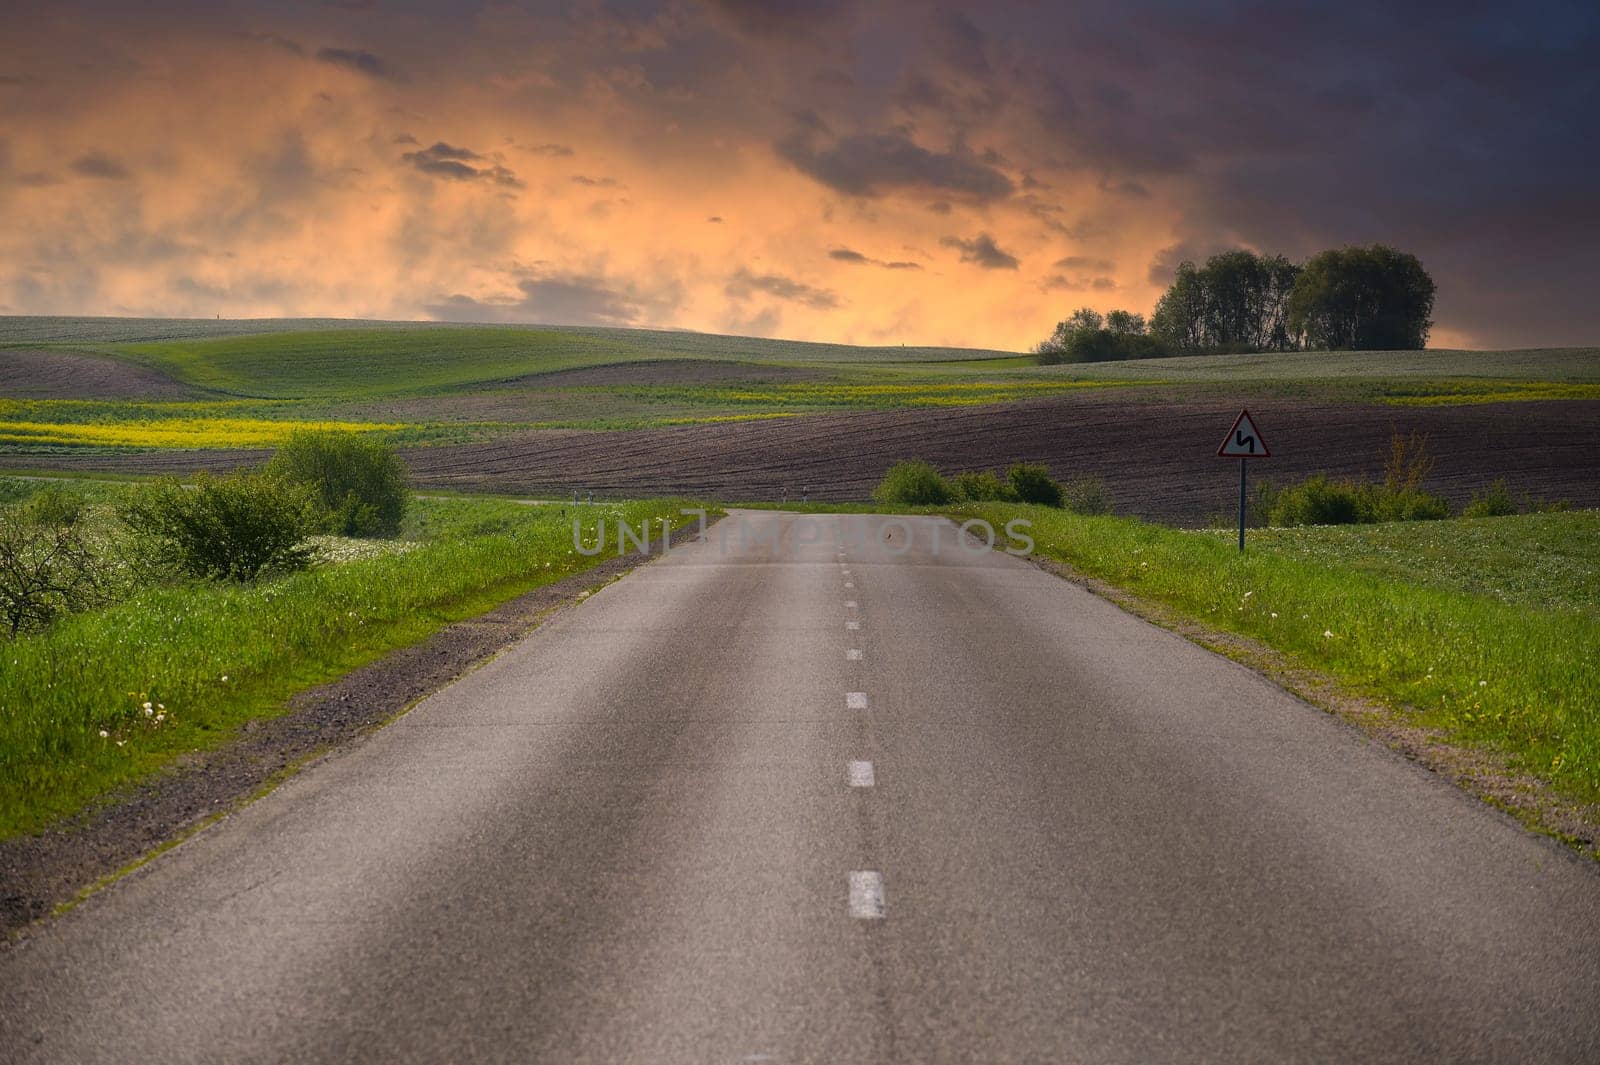 Asphalt road running through countryside landscape by NetPix